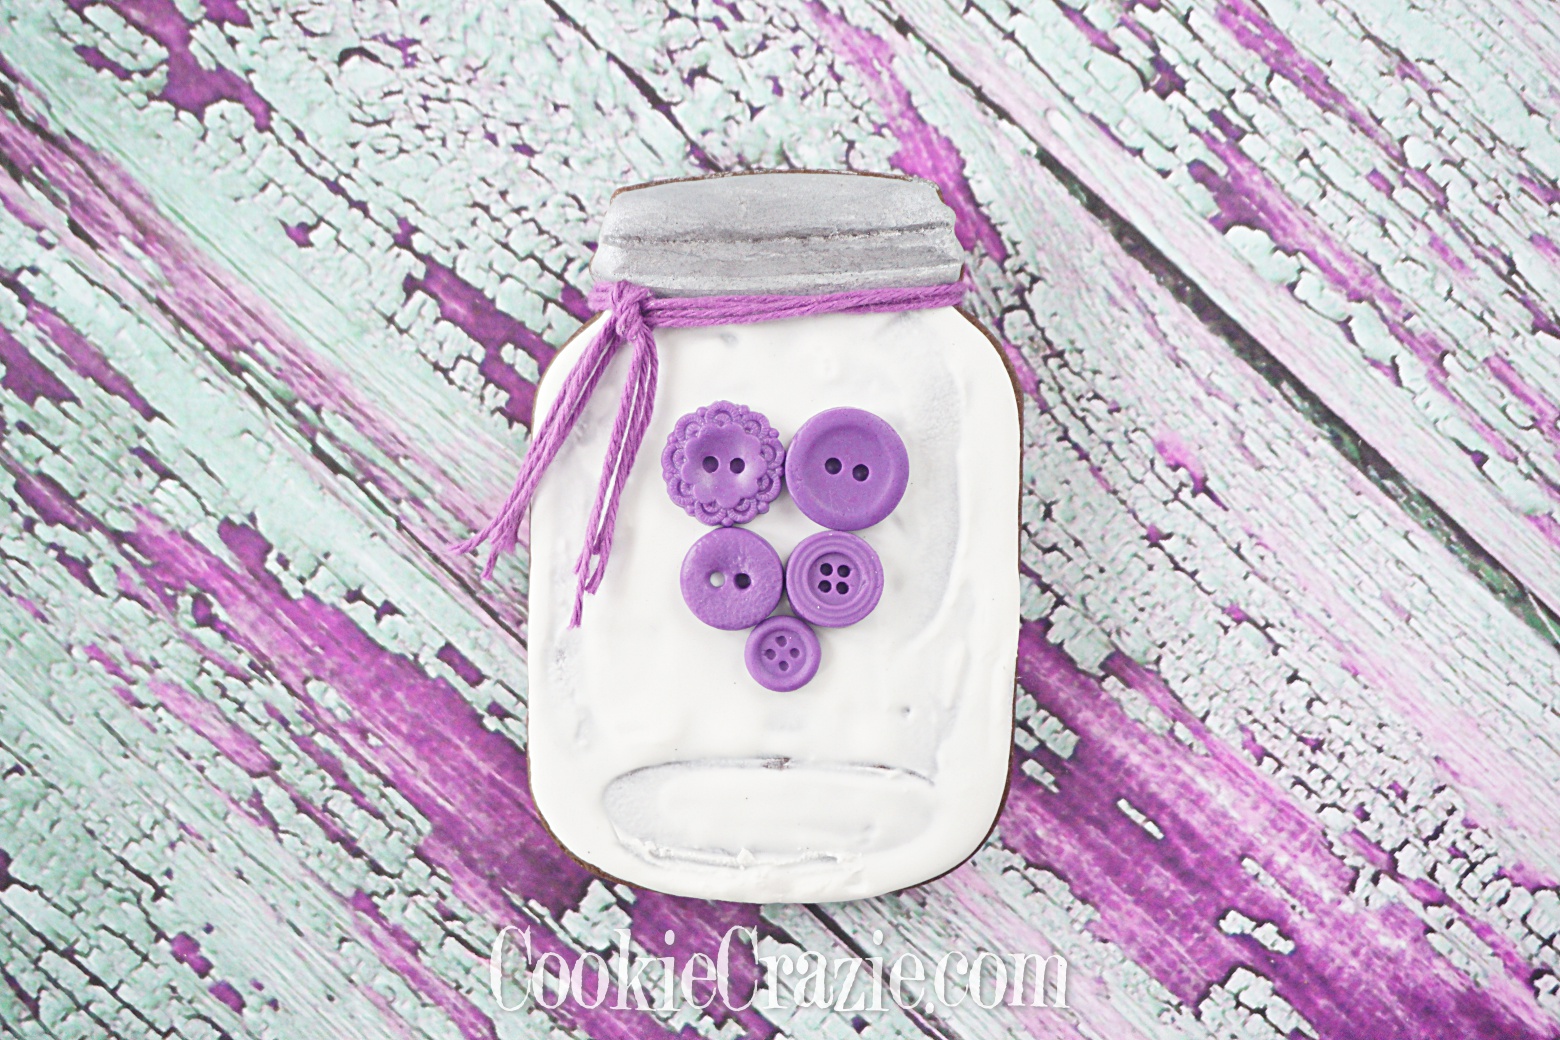  Valentine Mason Jar Decorated Sugar Cookie YouTube video  HERE  